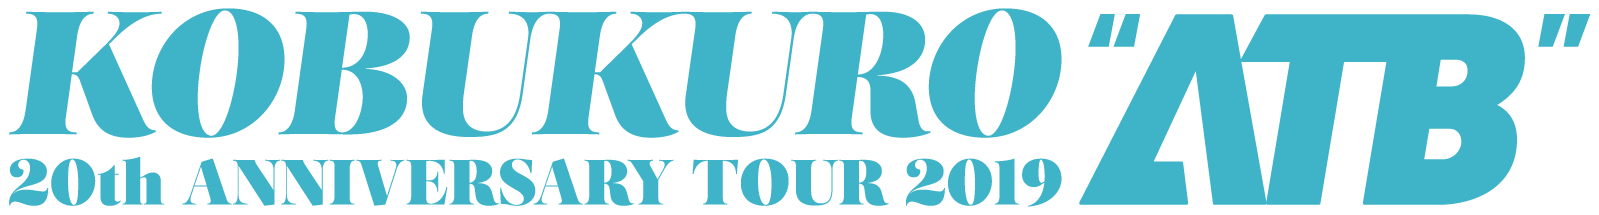 KOBUKURO 20TH ANNIVERSARY TOUR 2019 “ATB”